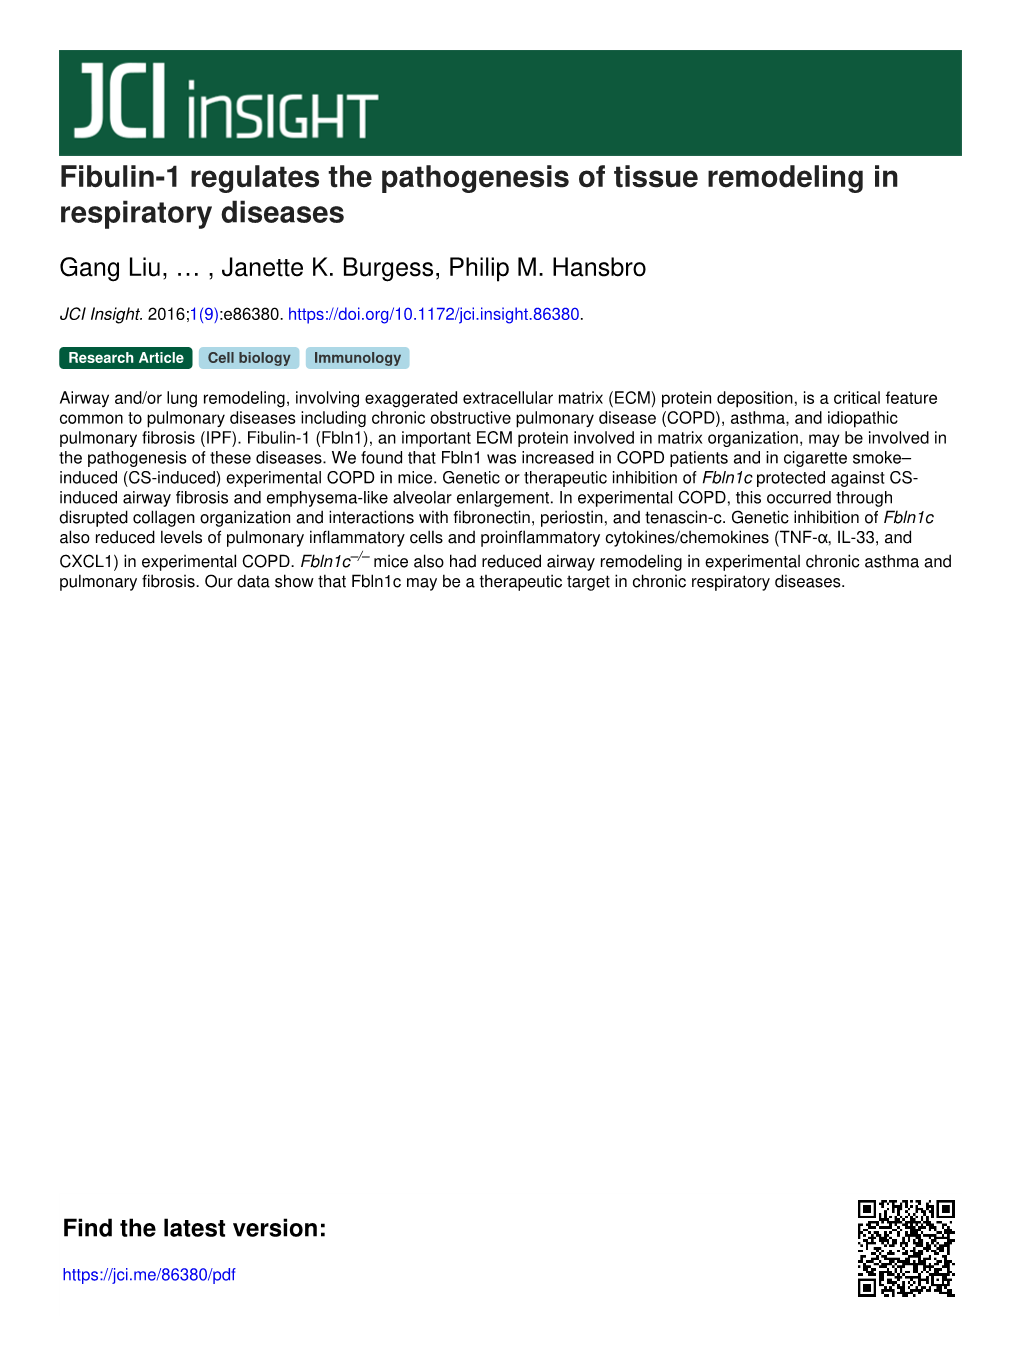 Fibulin-1 Regulates the Pathogenesis of Tissue Remodeling in Respiratory Diseases